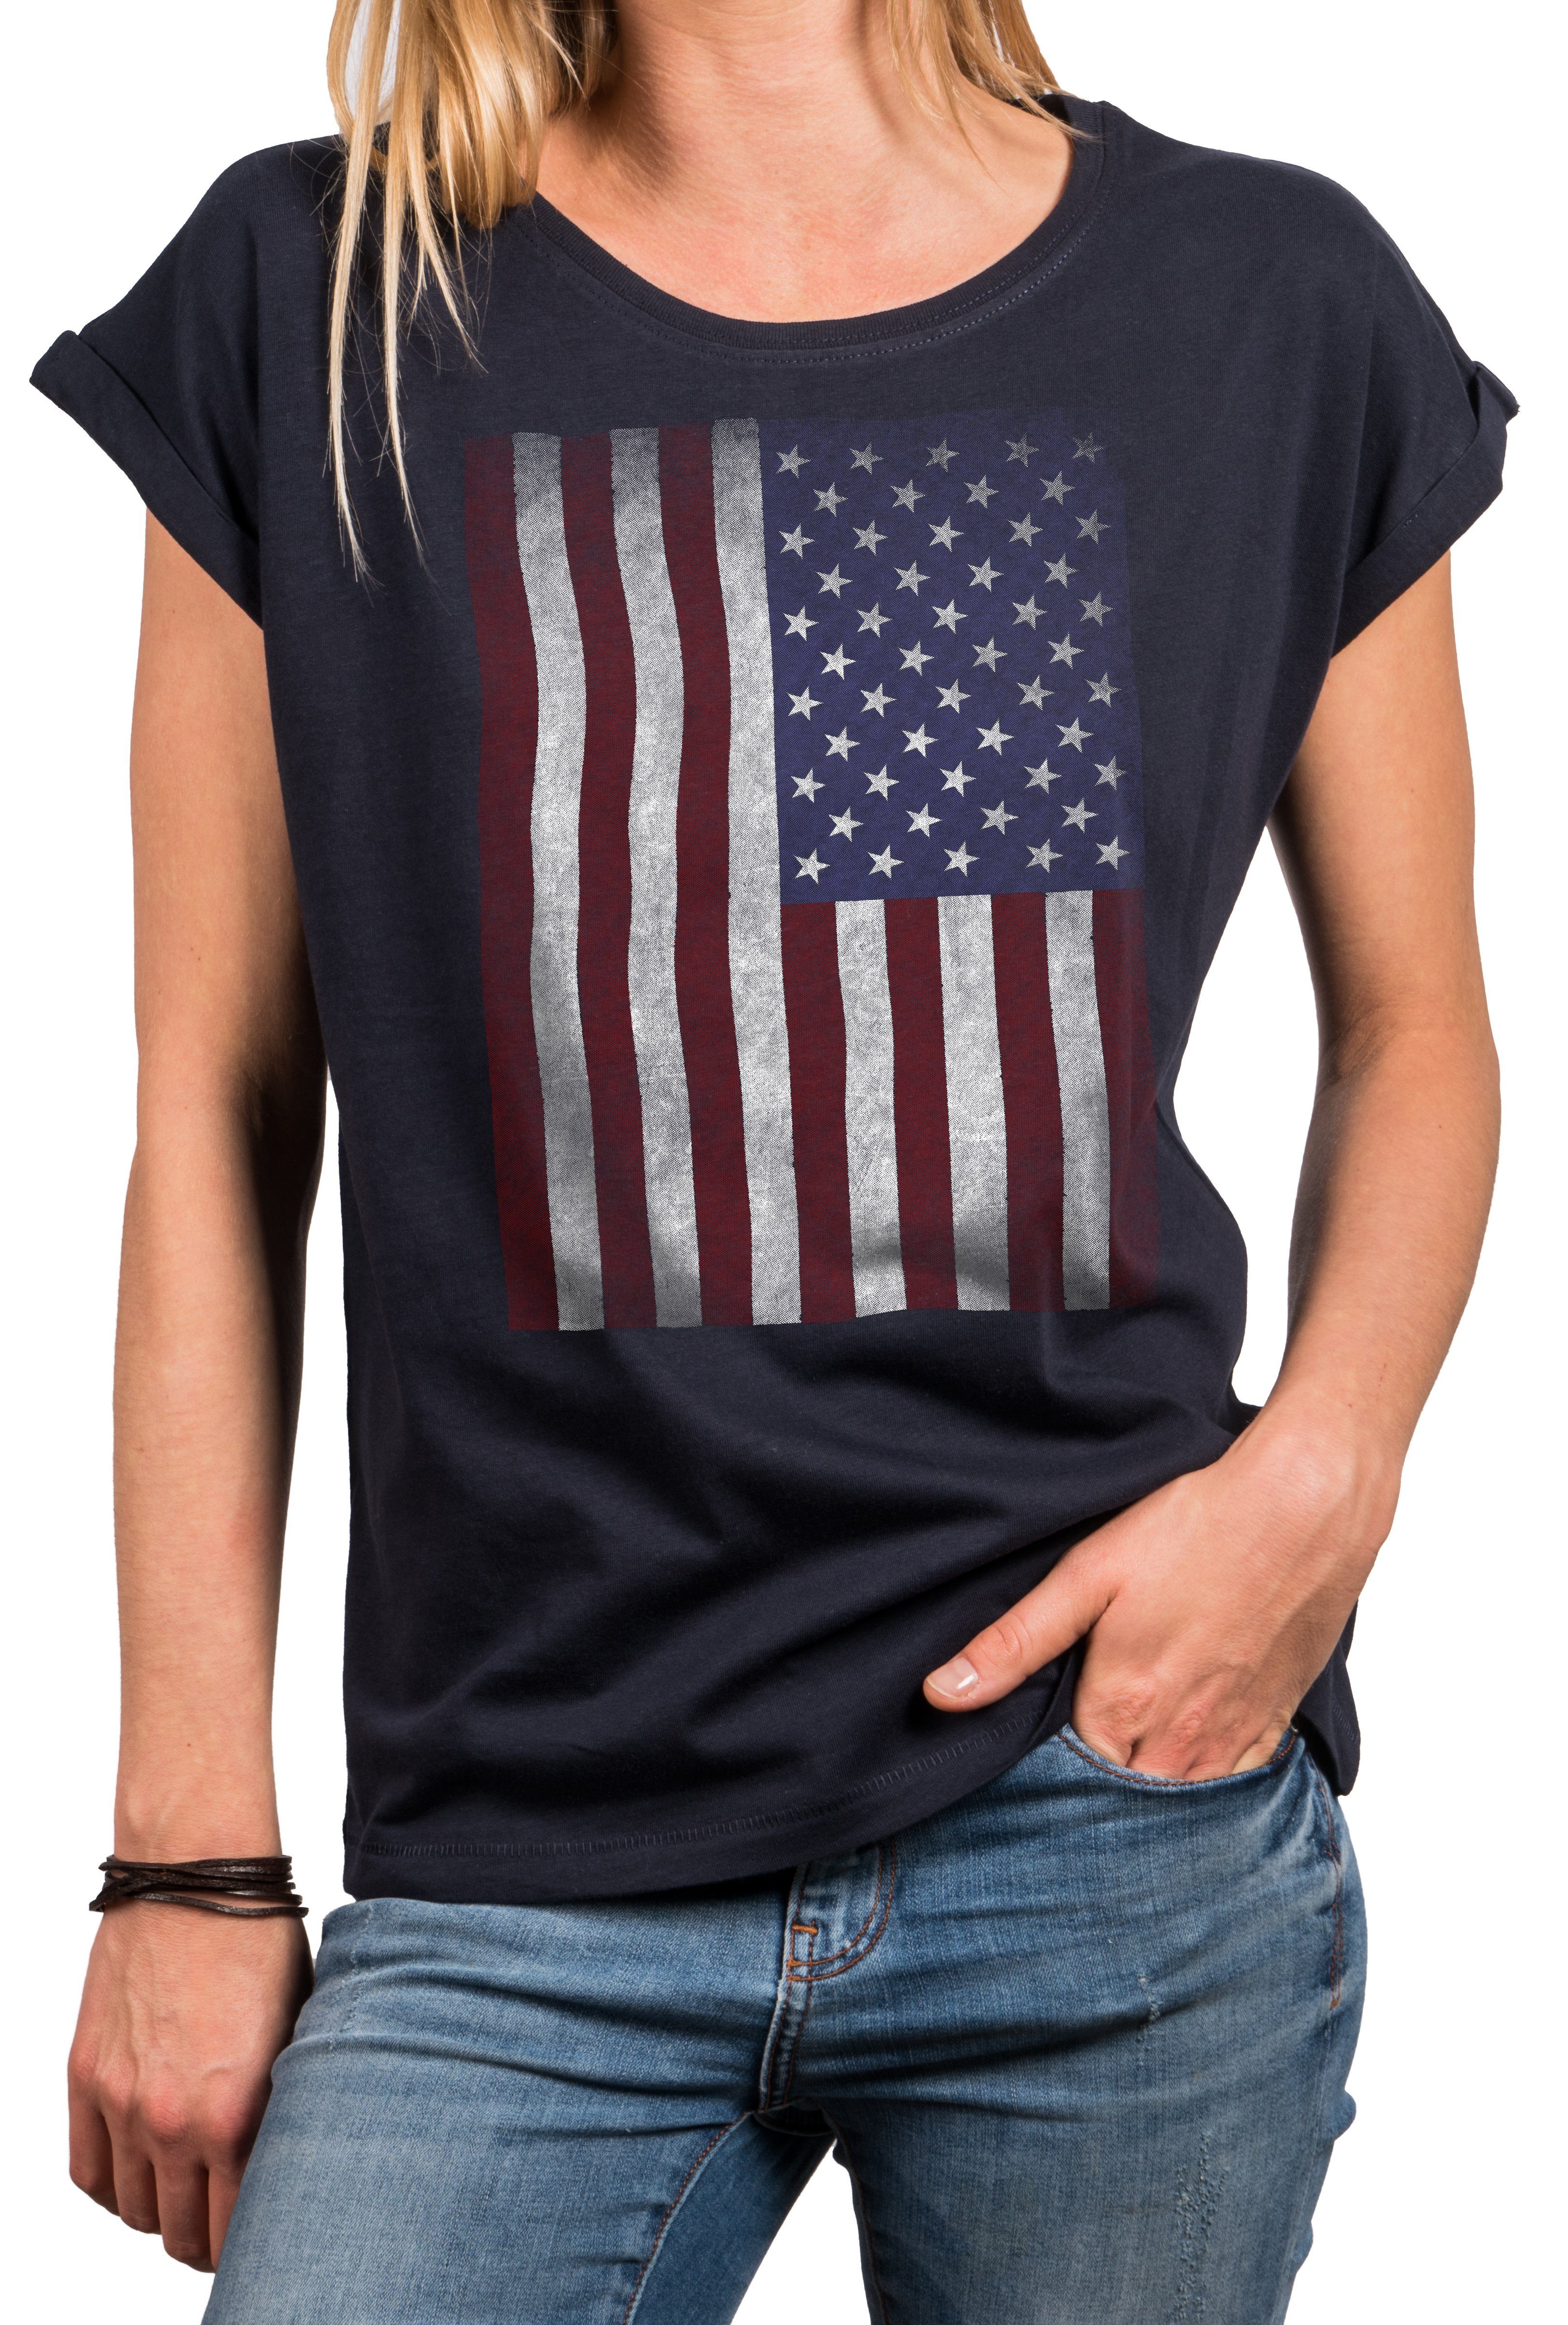 MAKAYA Print-Shirt Damen (Kurzarm, Amerika große Vintage Sommer Baumwolle, Flagge Fahne schwarz, blau) Top USA Oberteile Größen grau, Tunika